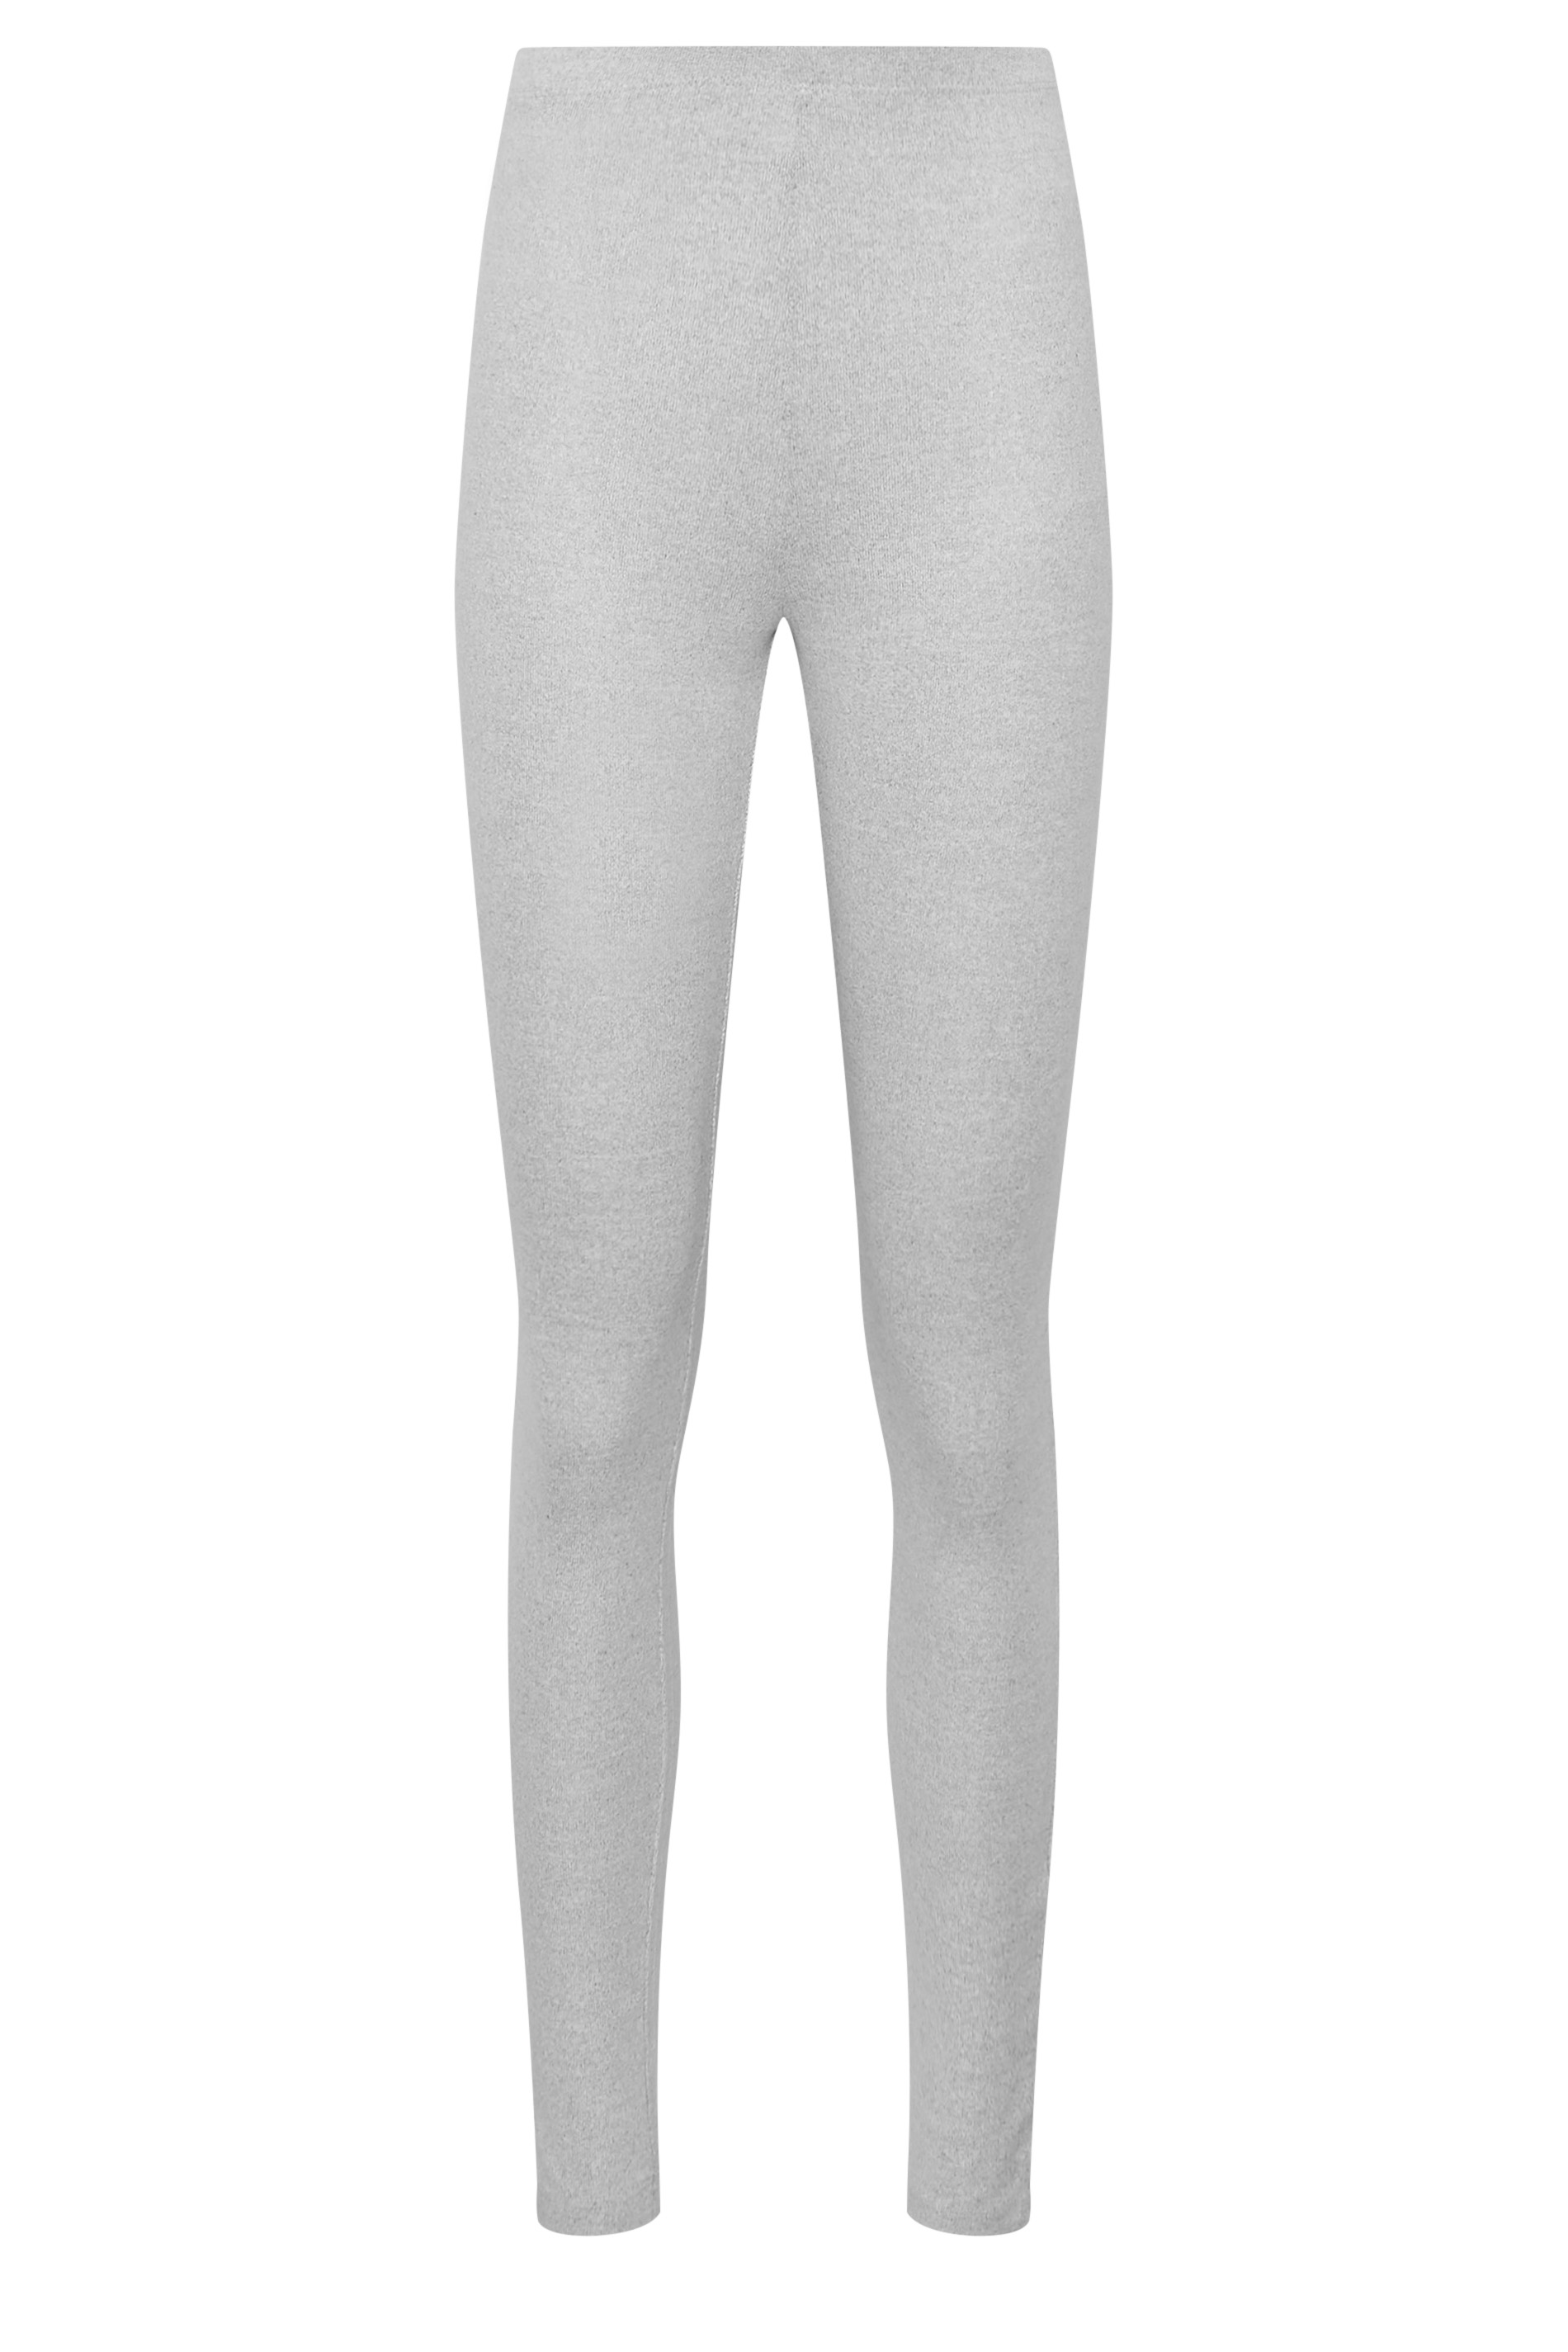 DIM DIM LEISURE - Leggings - Trousers - light grey 